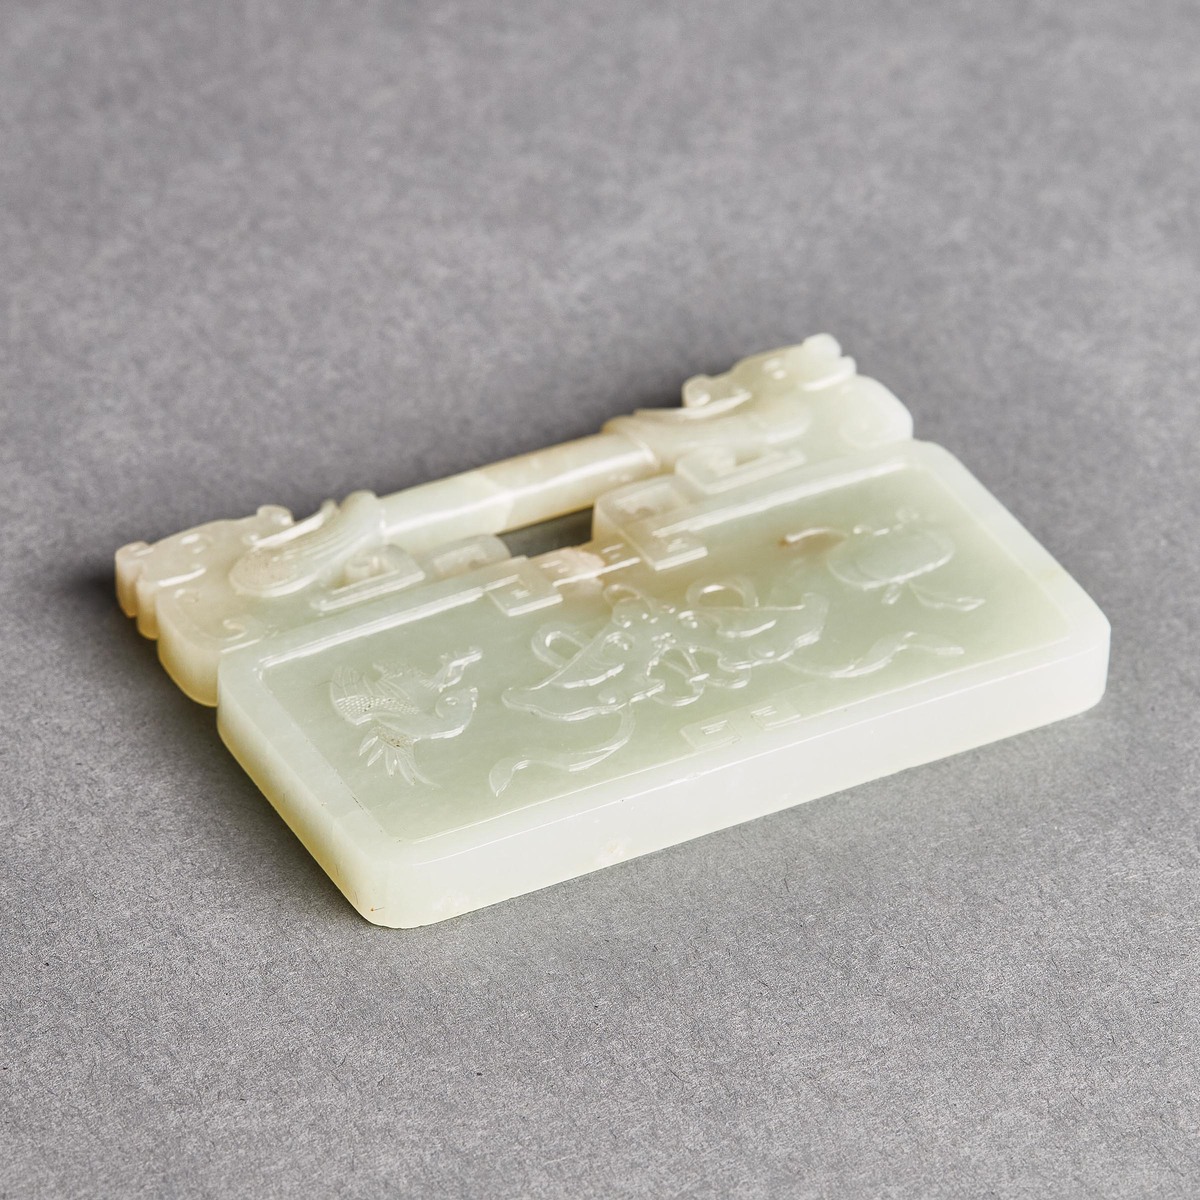 A Pale Celadon Jade Lock-Form 'Yong Bao Chang Chun' Plaque, 19th Century, 清 十九世纪 青白玉雕'永保长春'锁形牌桌屏, 玉牌 - Image 6 of 10